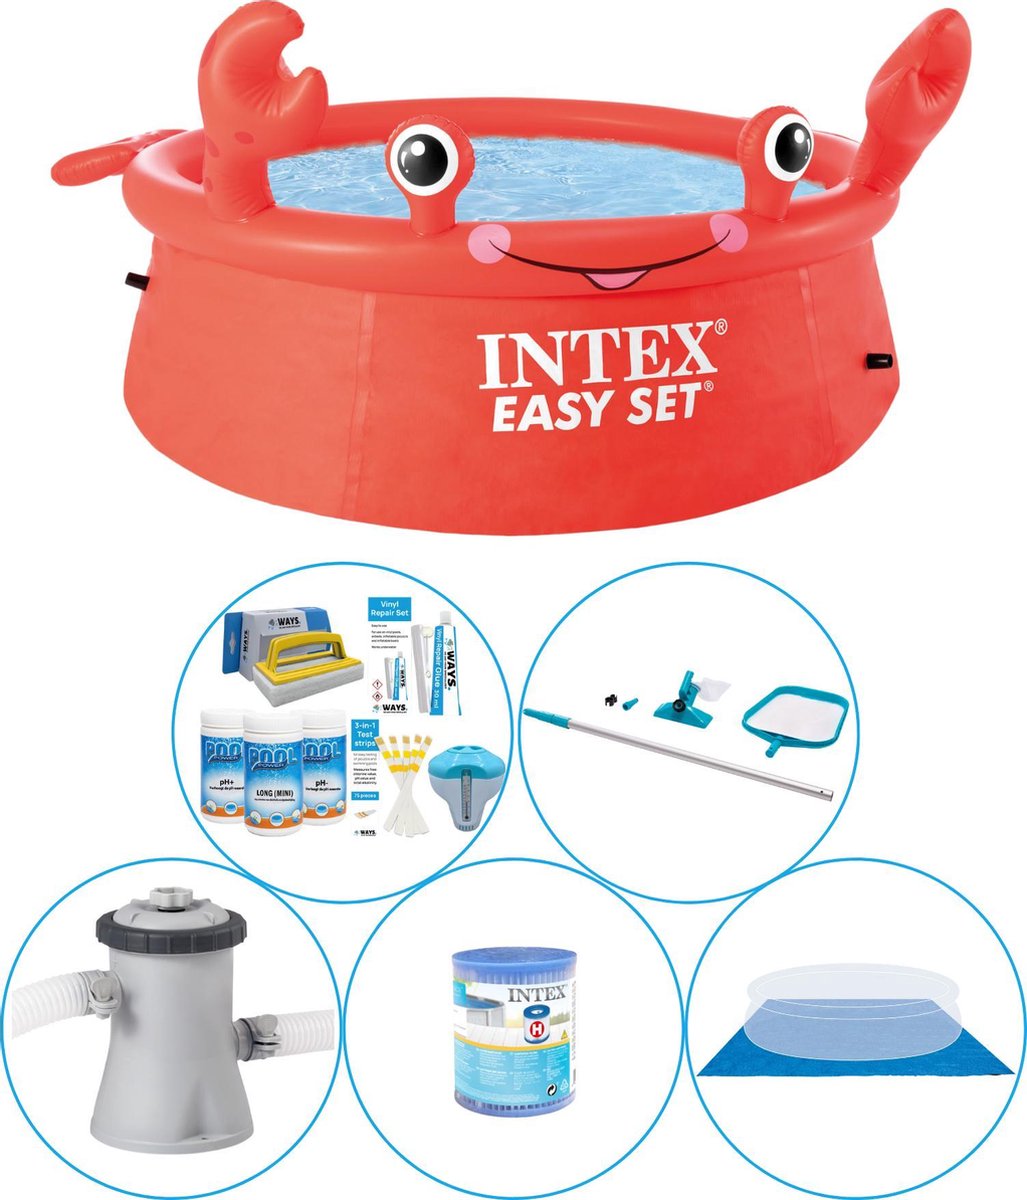 Intex Easy Set Krab Editie Rond 183x51 Cm - Zwembad Deal - Rood